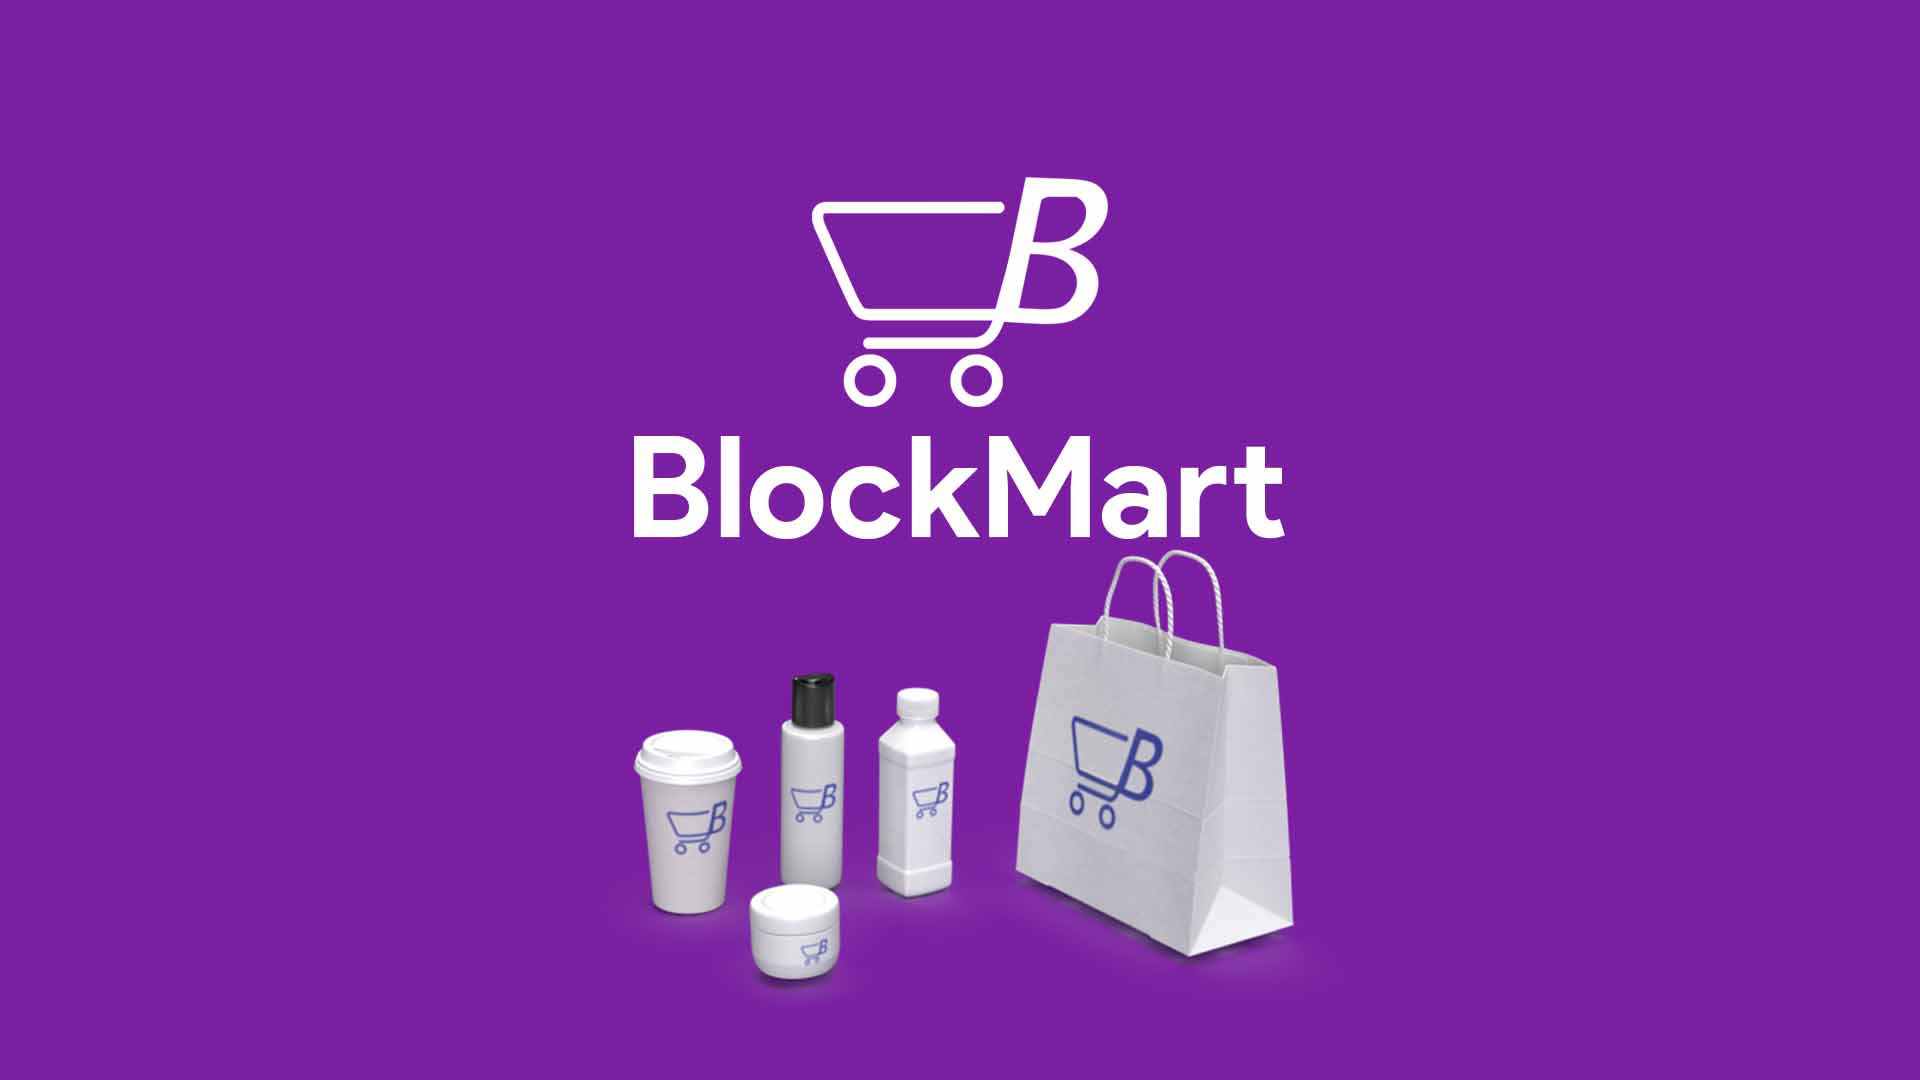 BlockMart